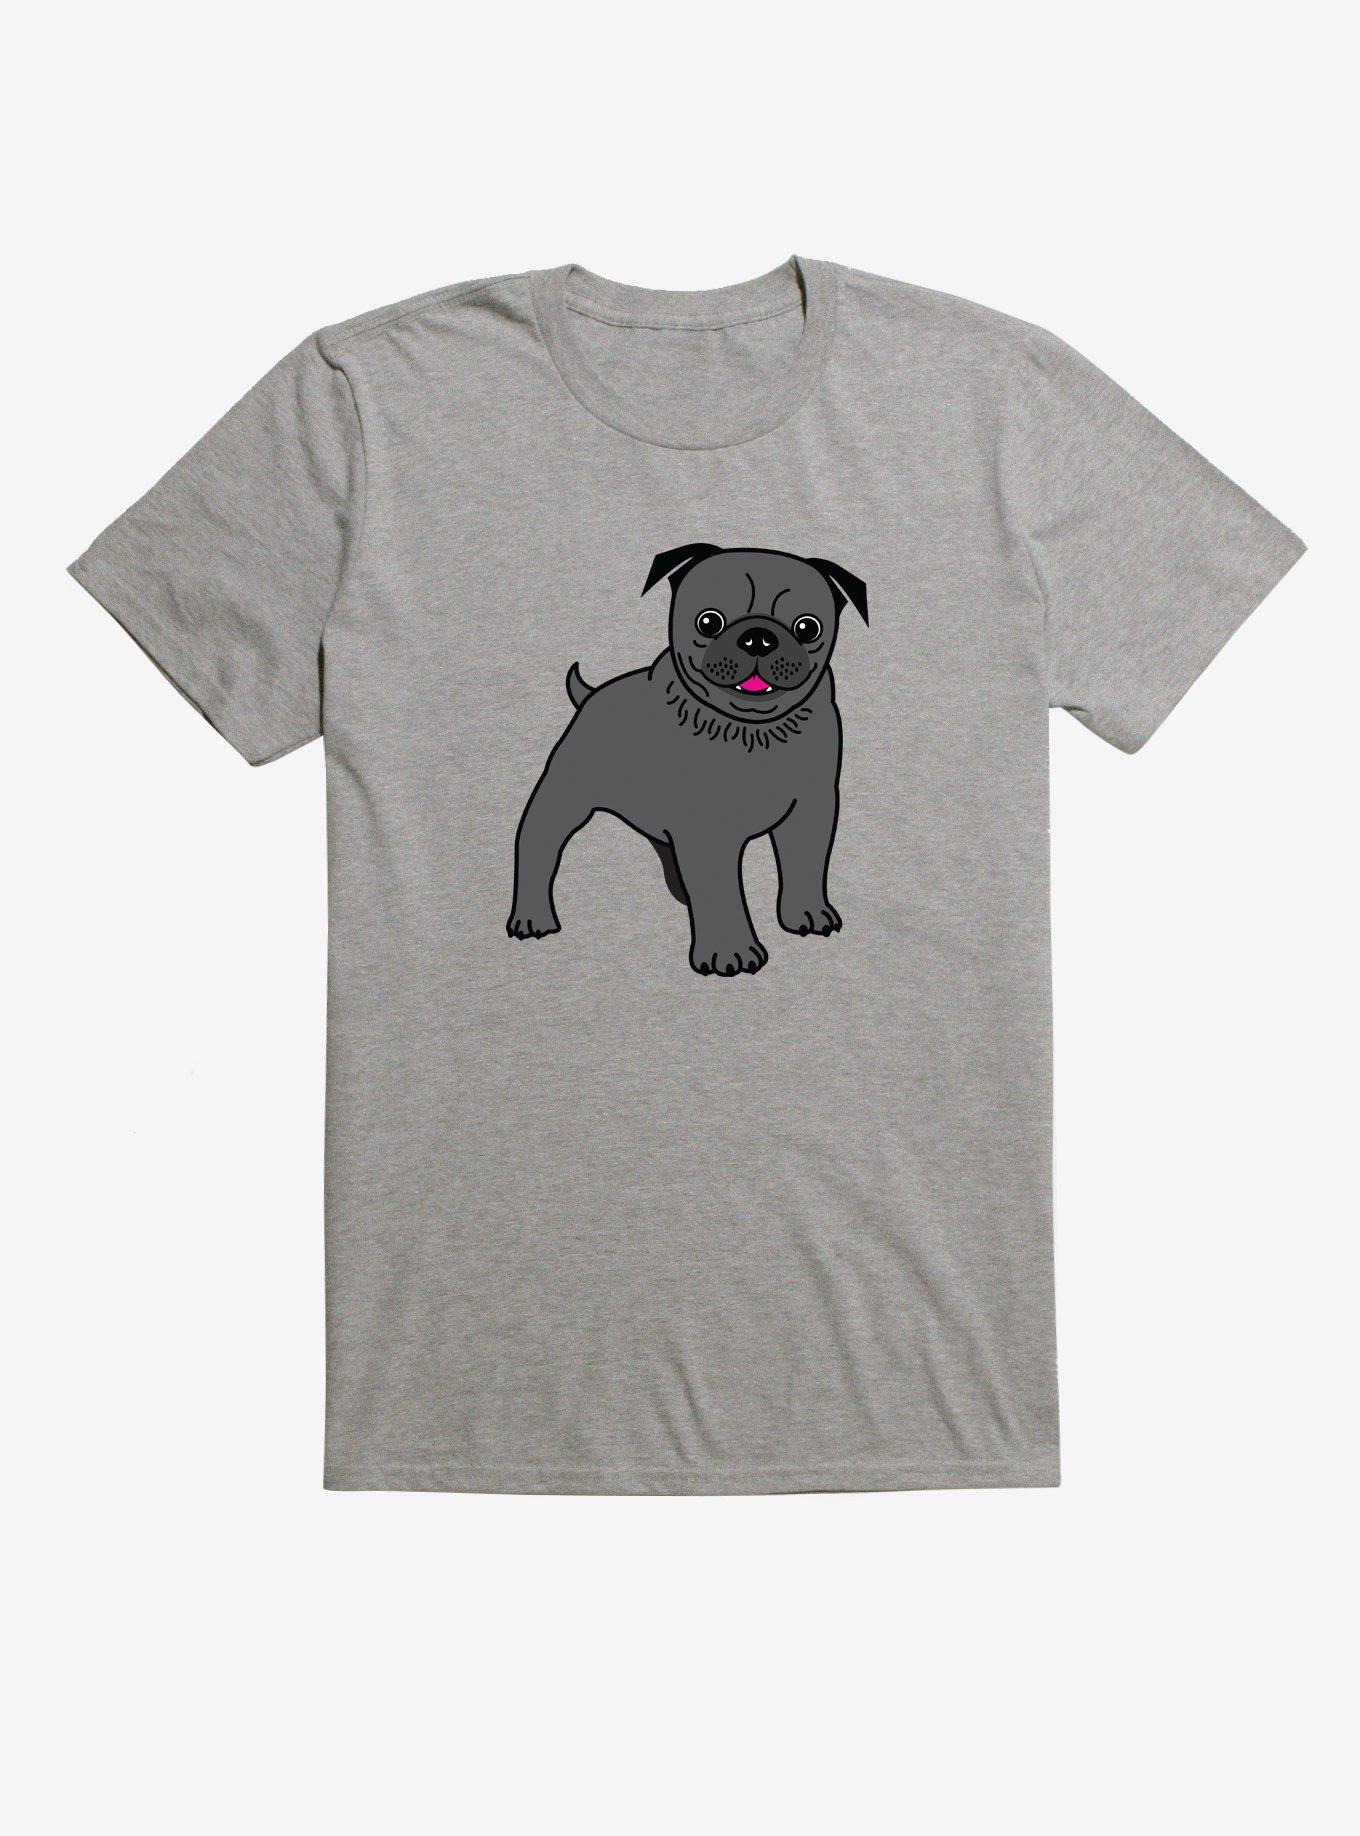 Smiling Pug T-Shirt